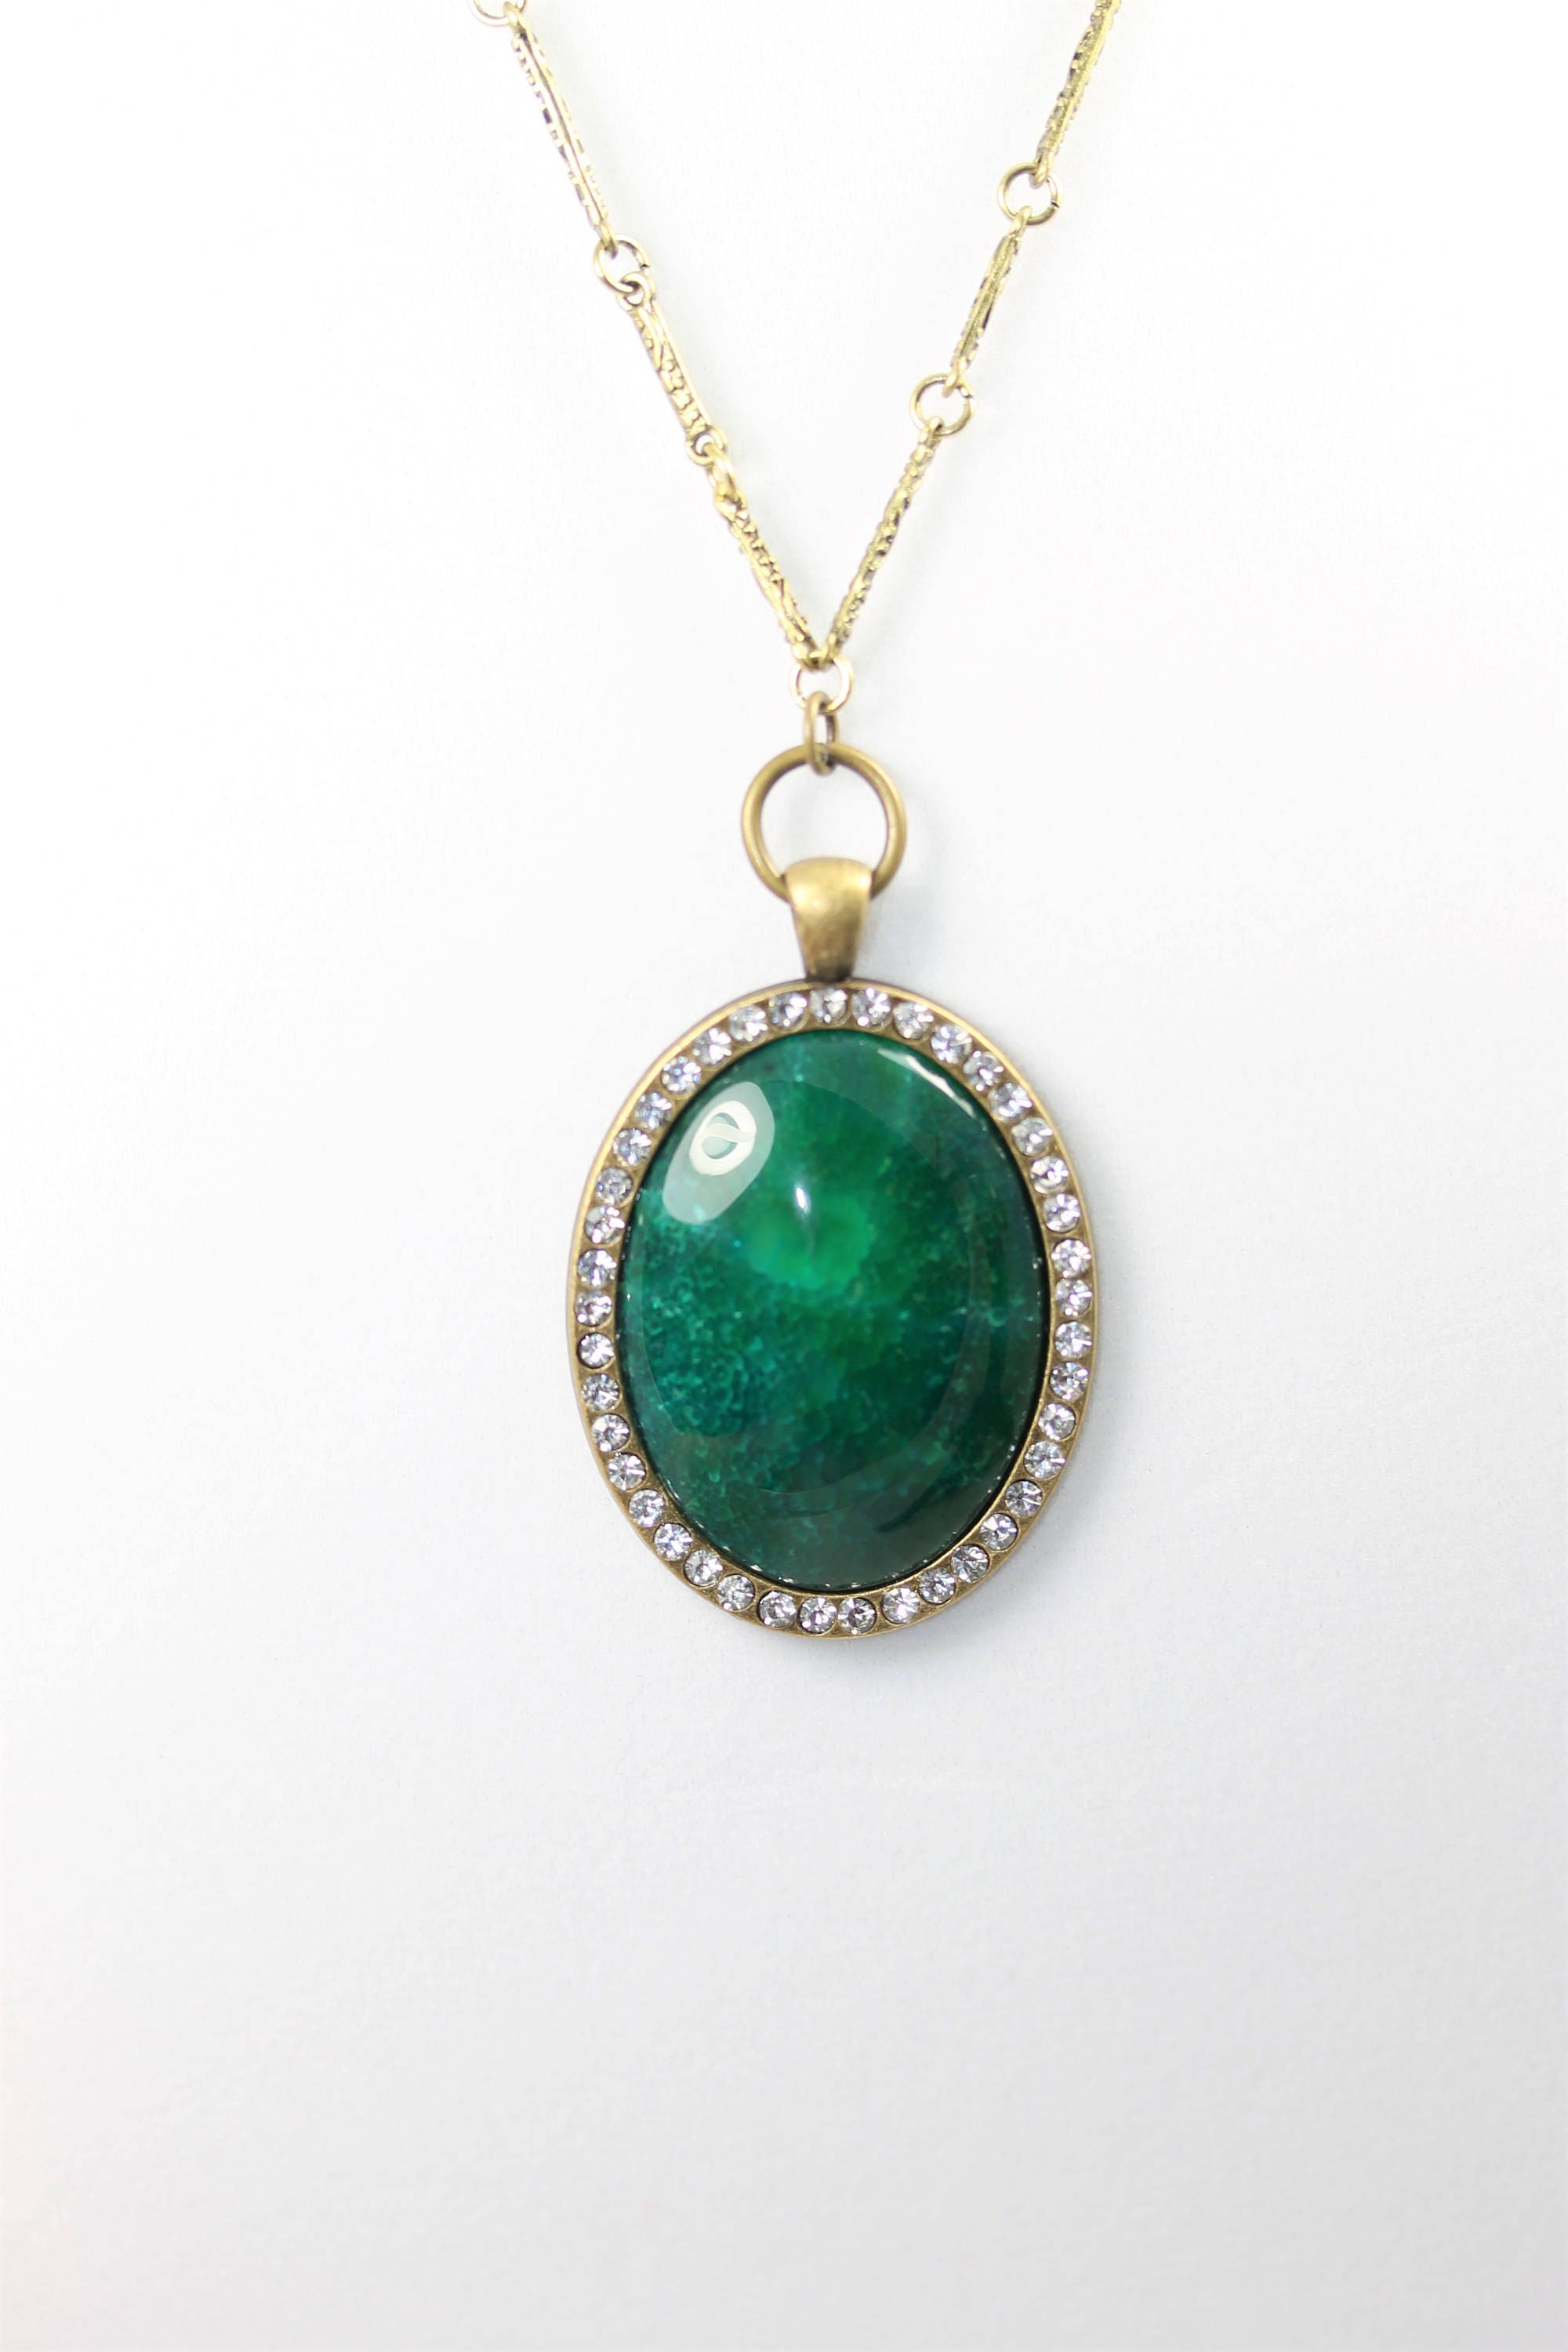 Green Gemstone Necklace Healing Gemstones Green Agates | Etsy